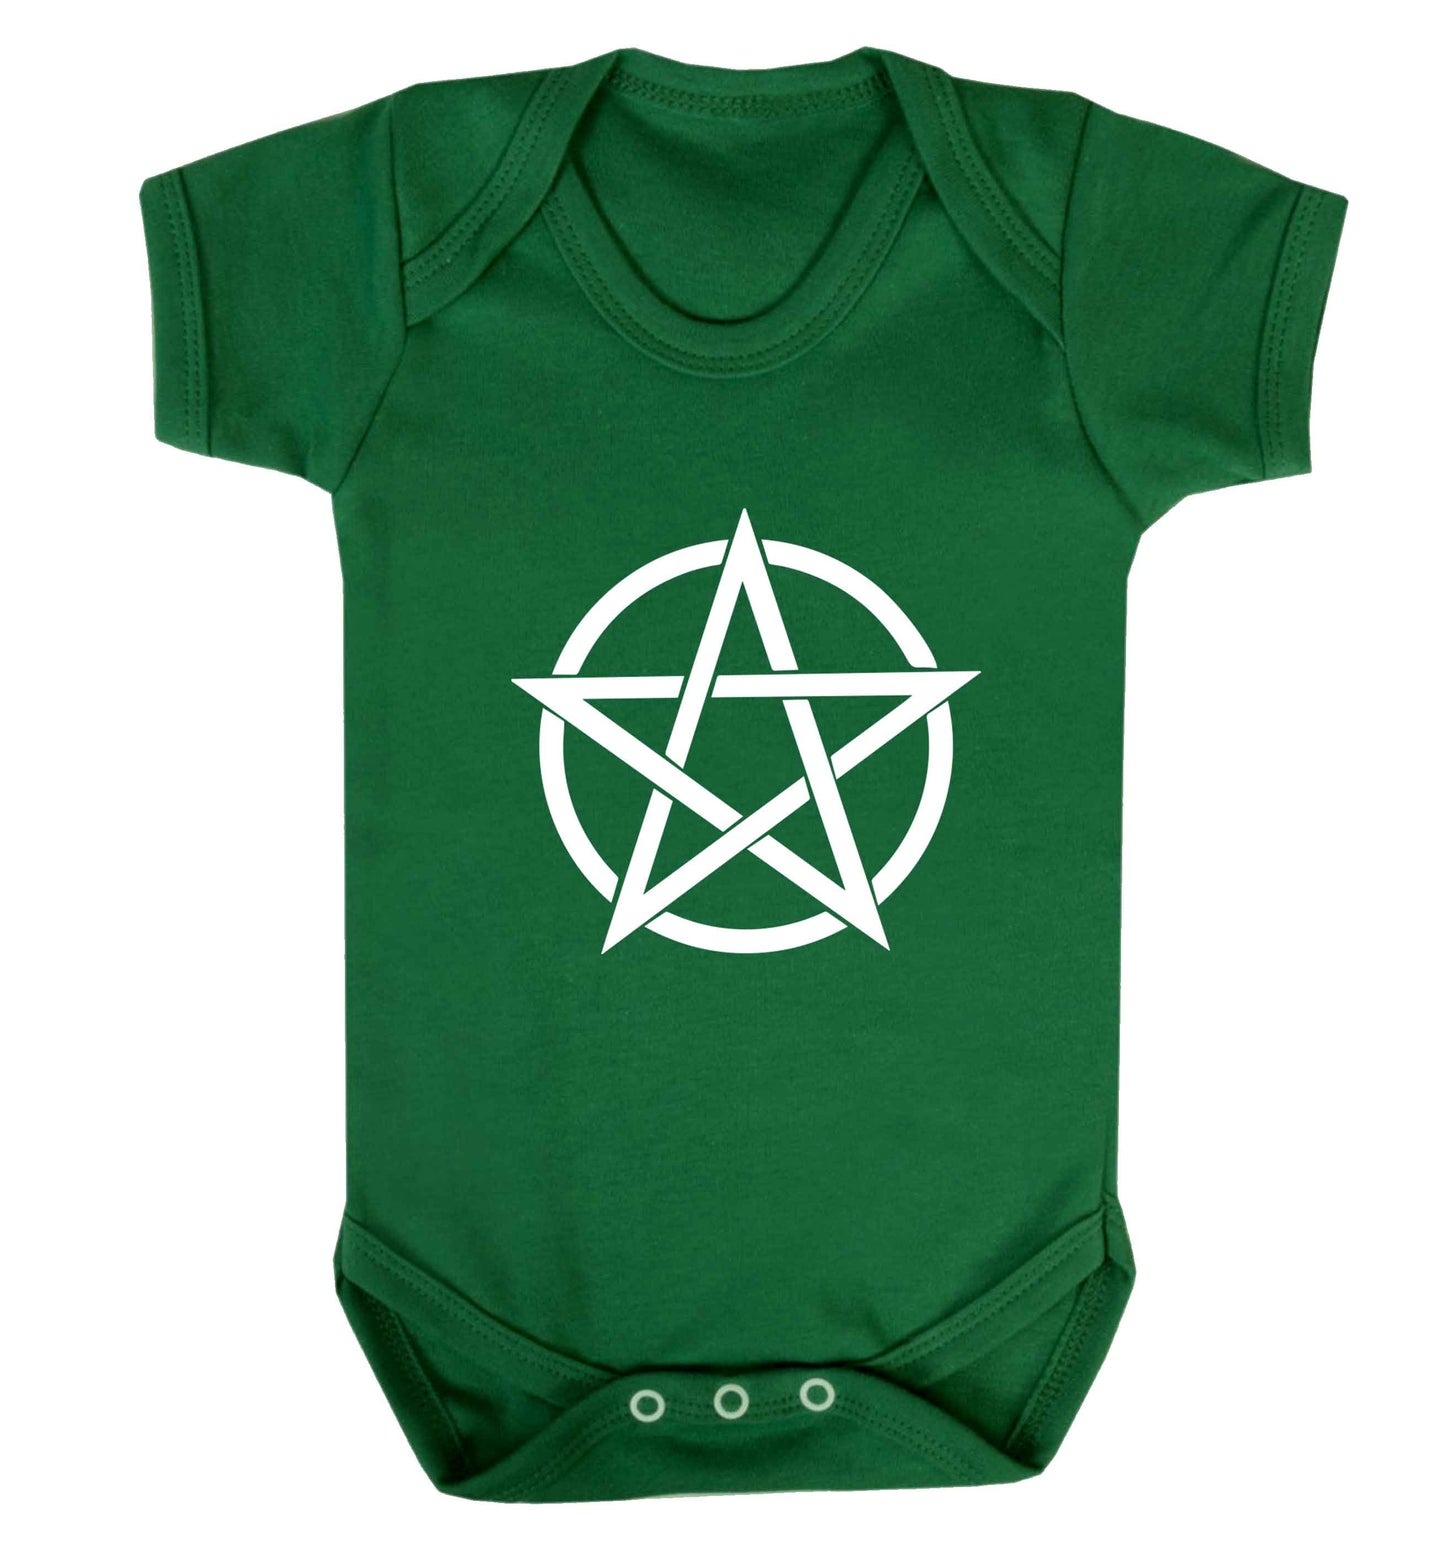 Pentagram symbol baby vest green 18-24 months